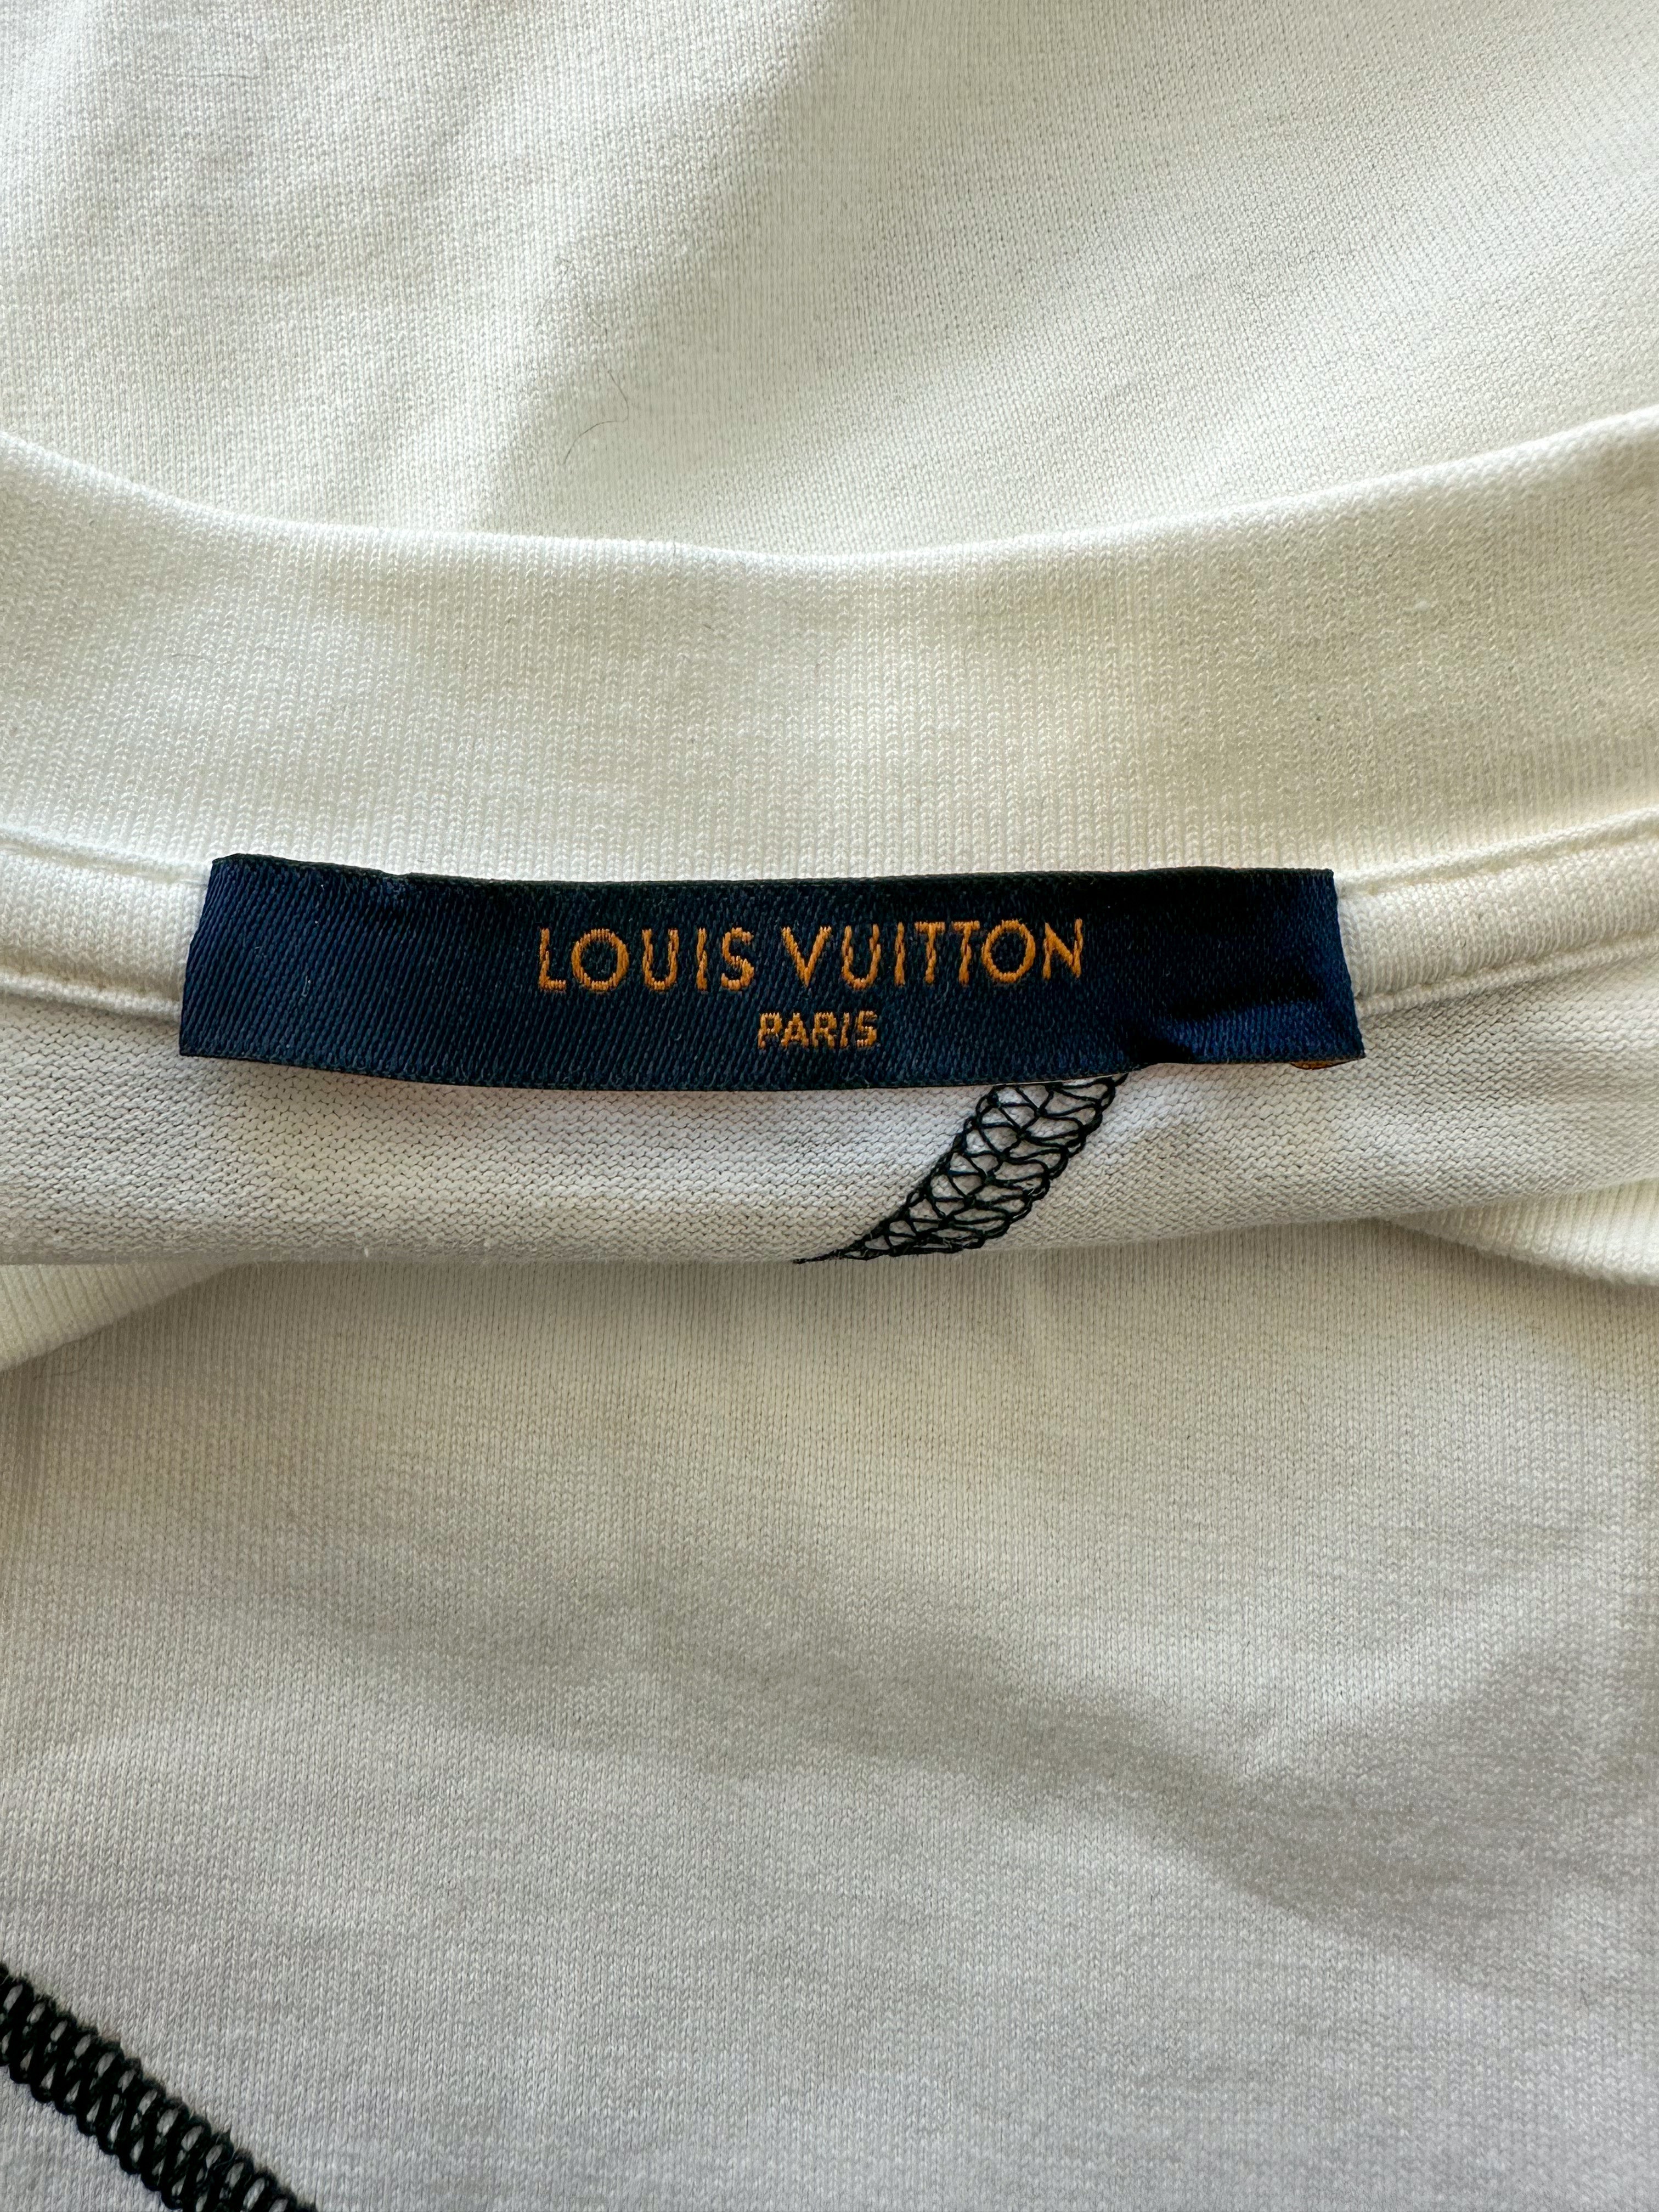 Áo TShirt Louis Vuitton